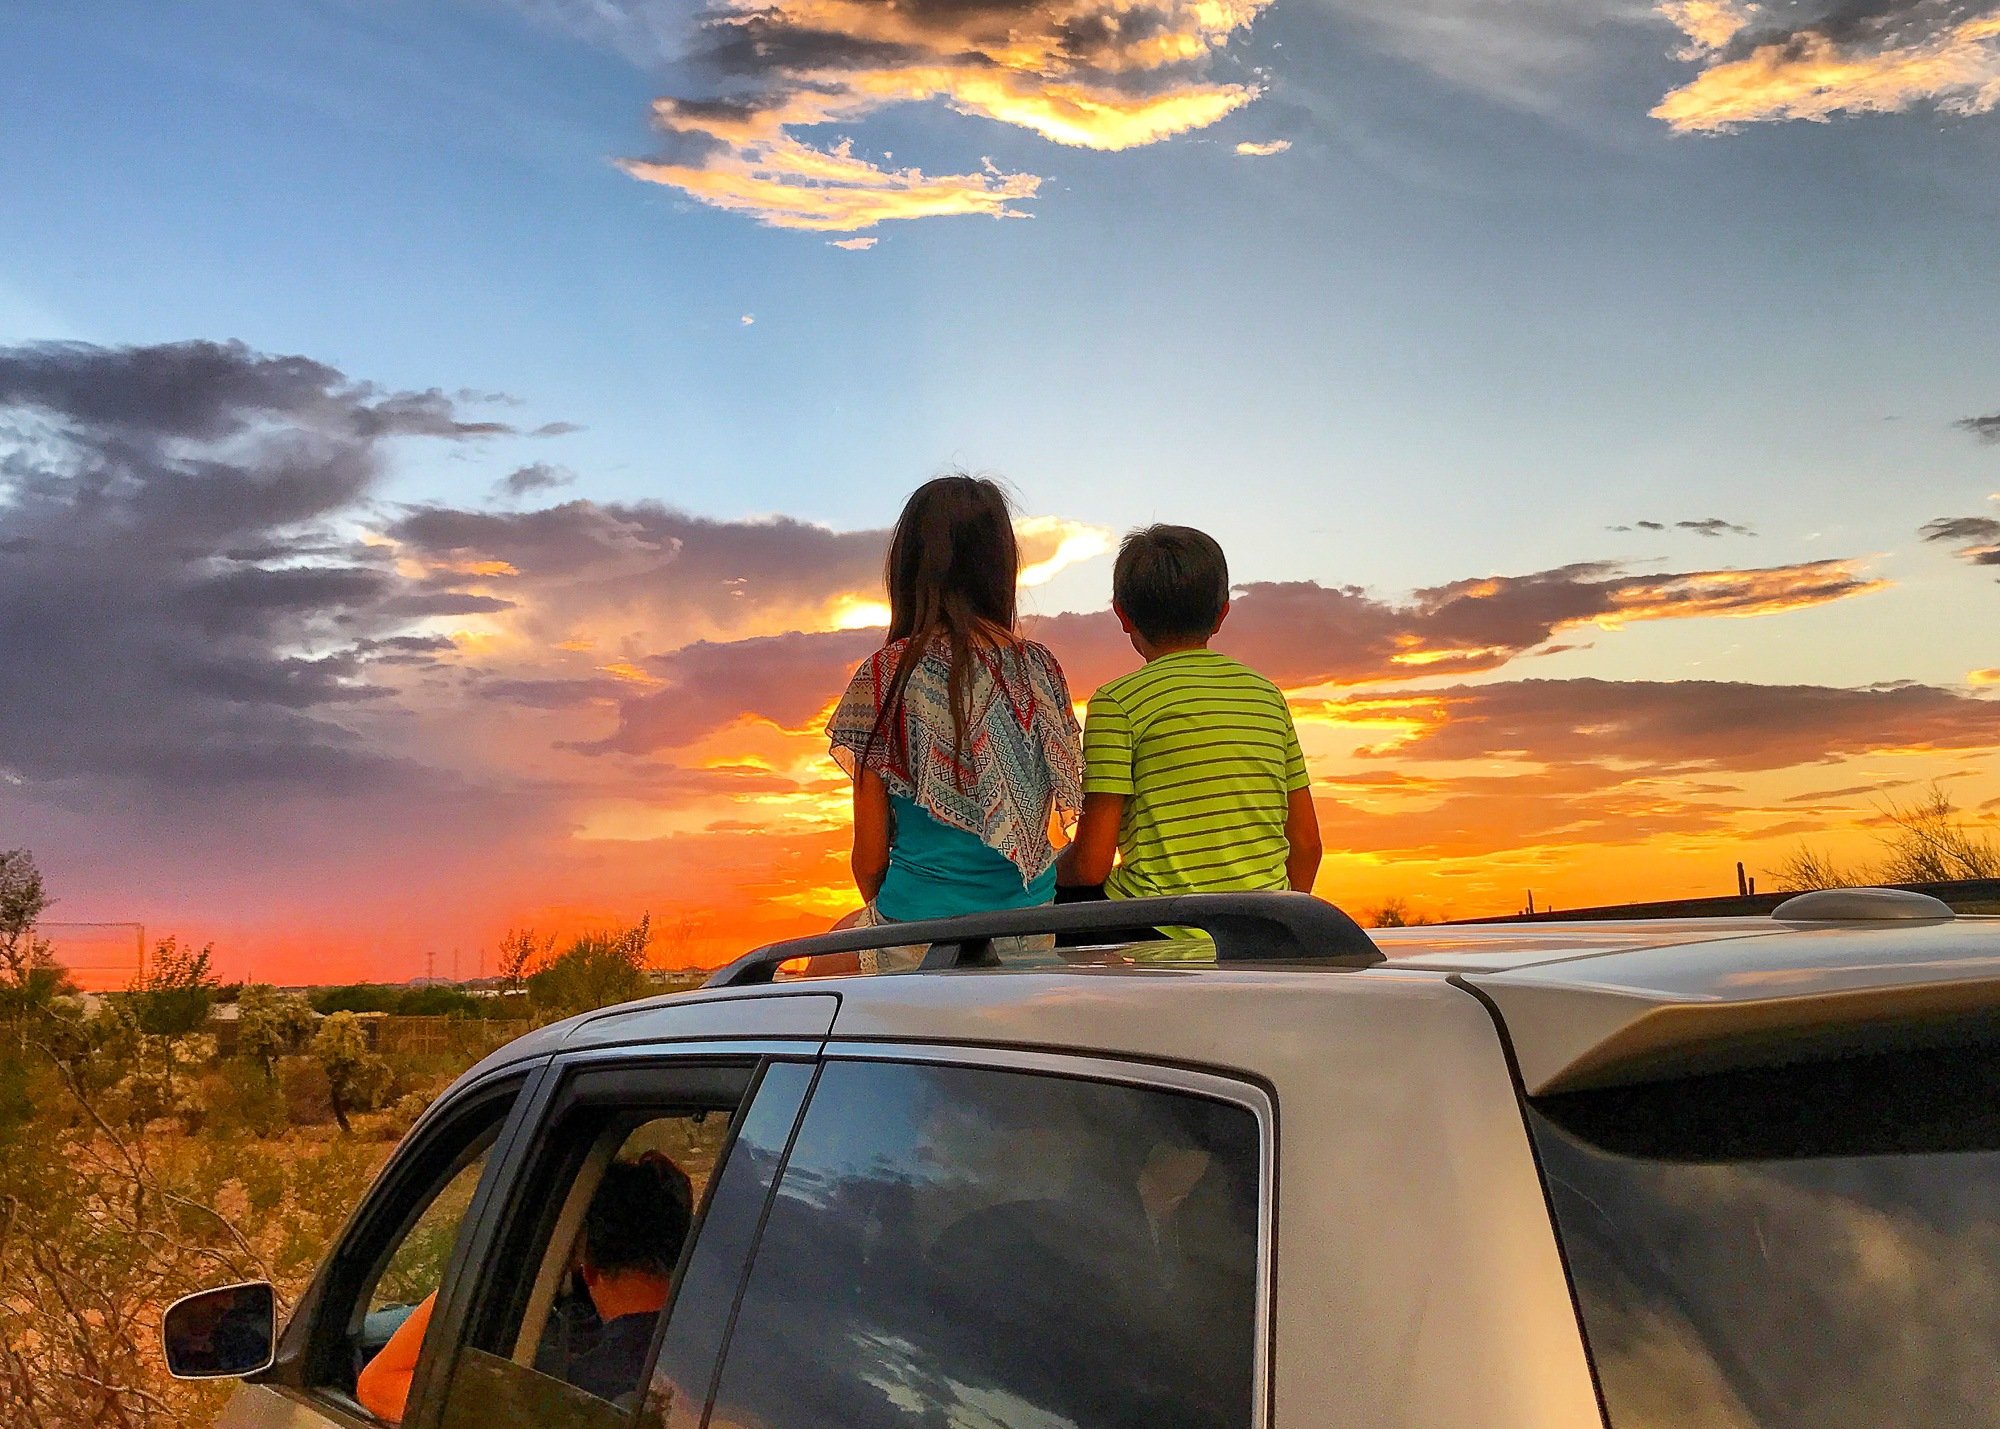 Kids enjoying a Scottsdale, Arizona sunset